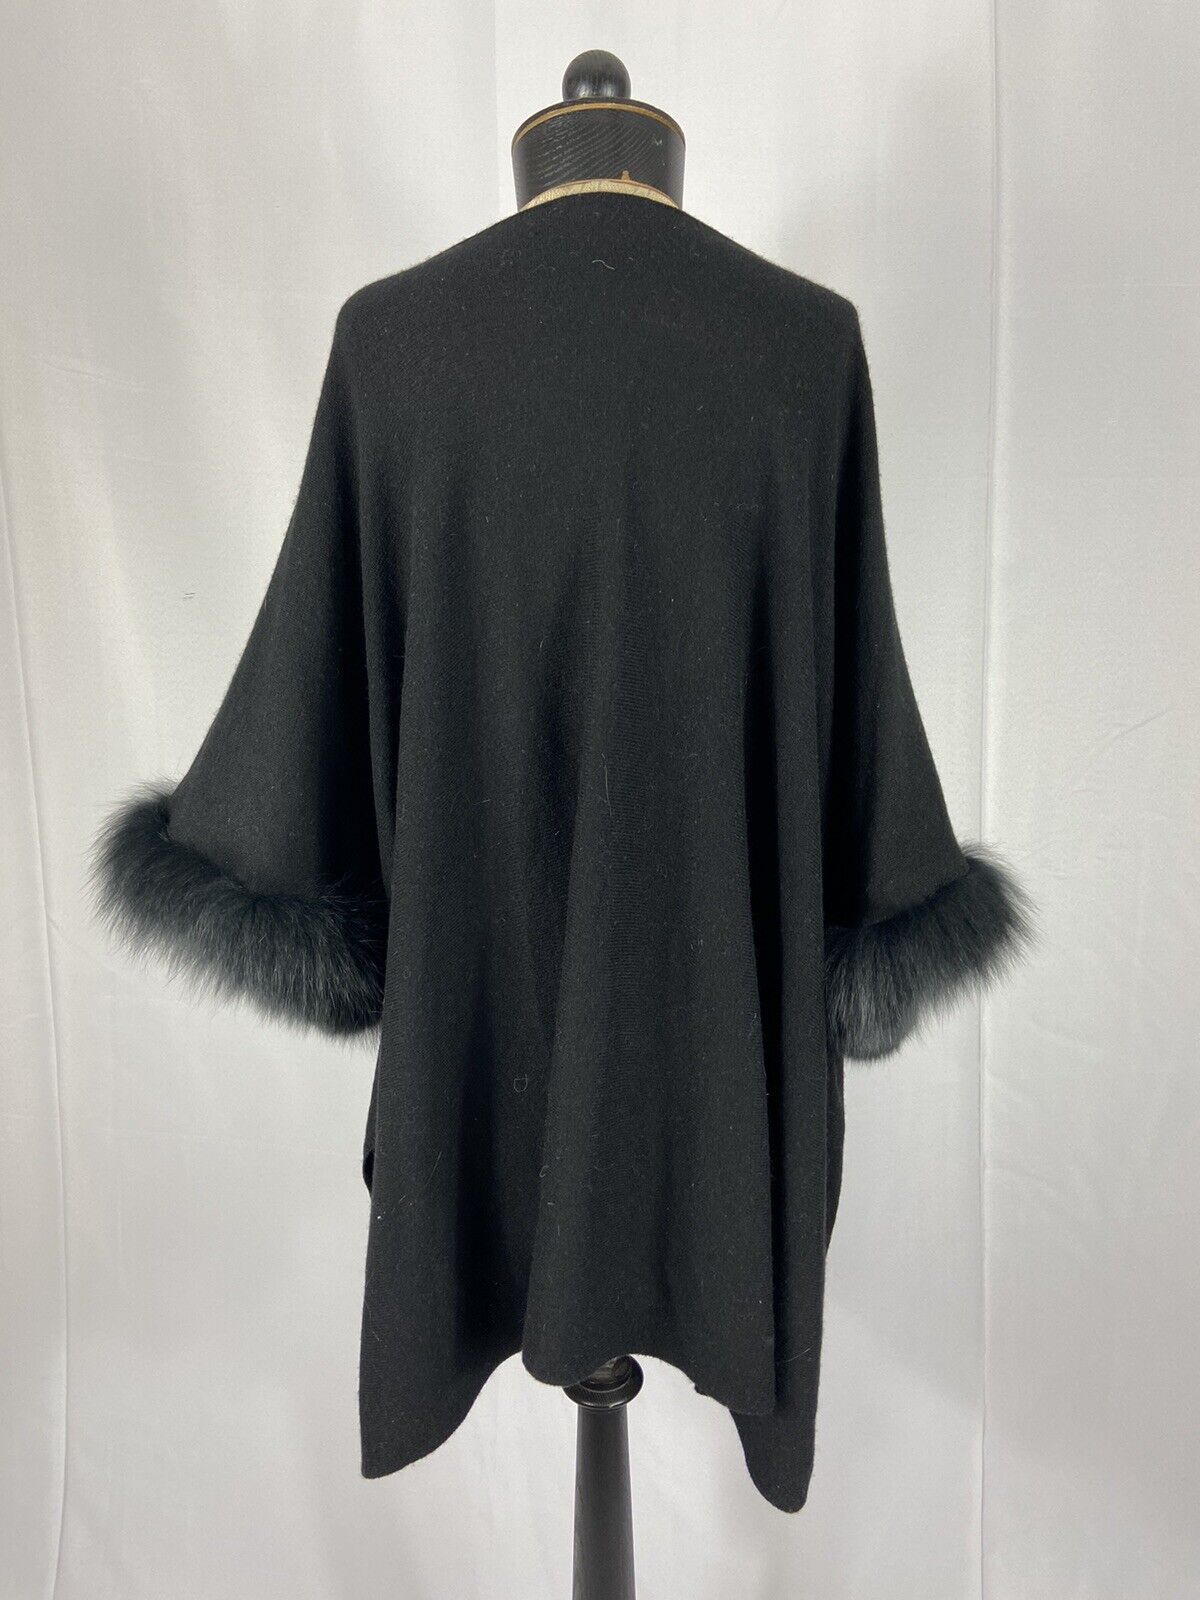 SOFIA Cashmere One Size Wool Cashmere Mink Trim Black Cape Wrap